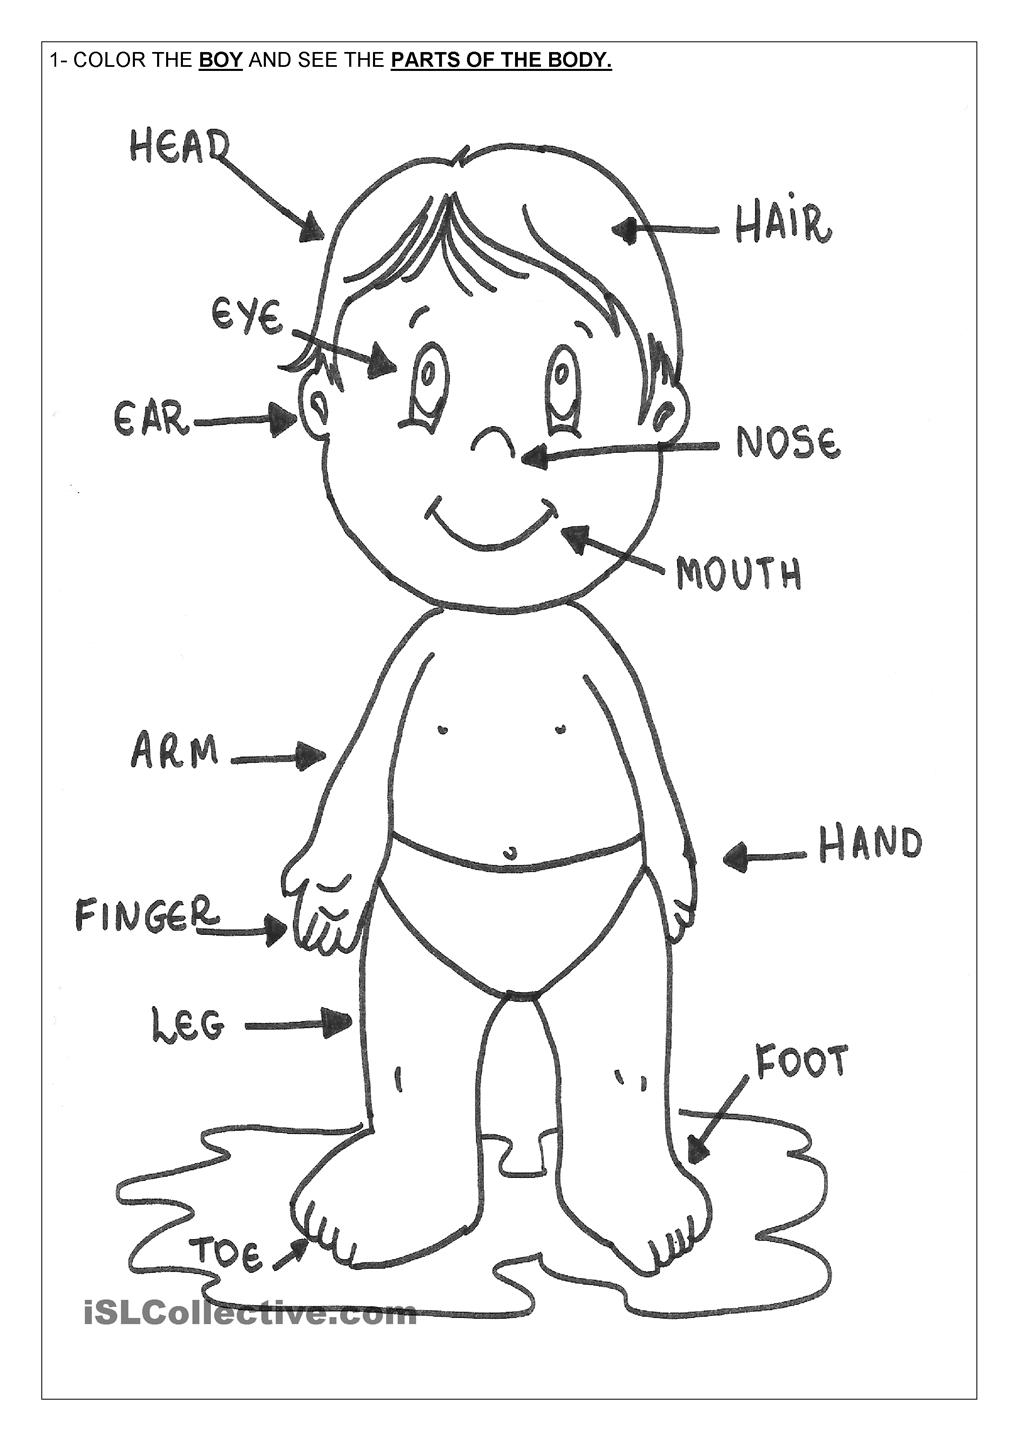 human-body-anatomy-drawing-at-getdrawings-free-download